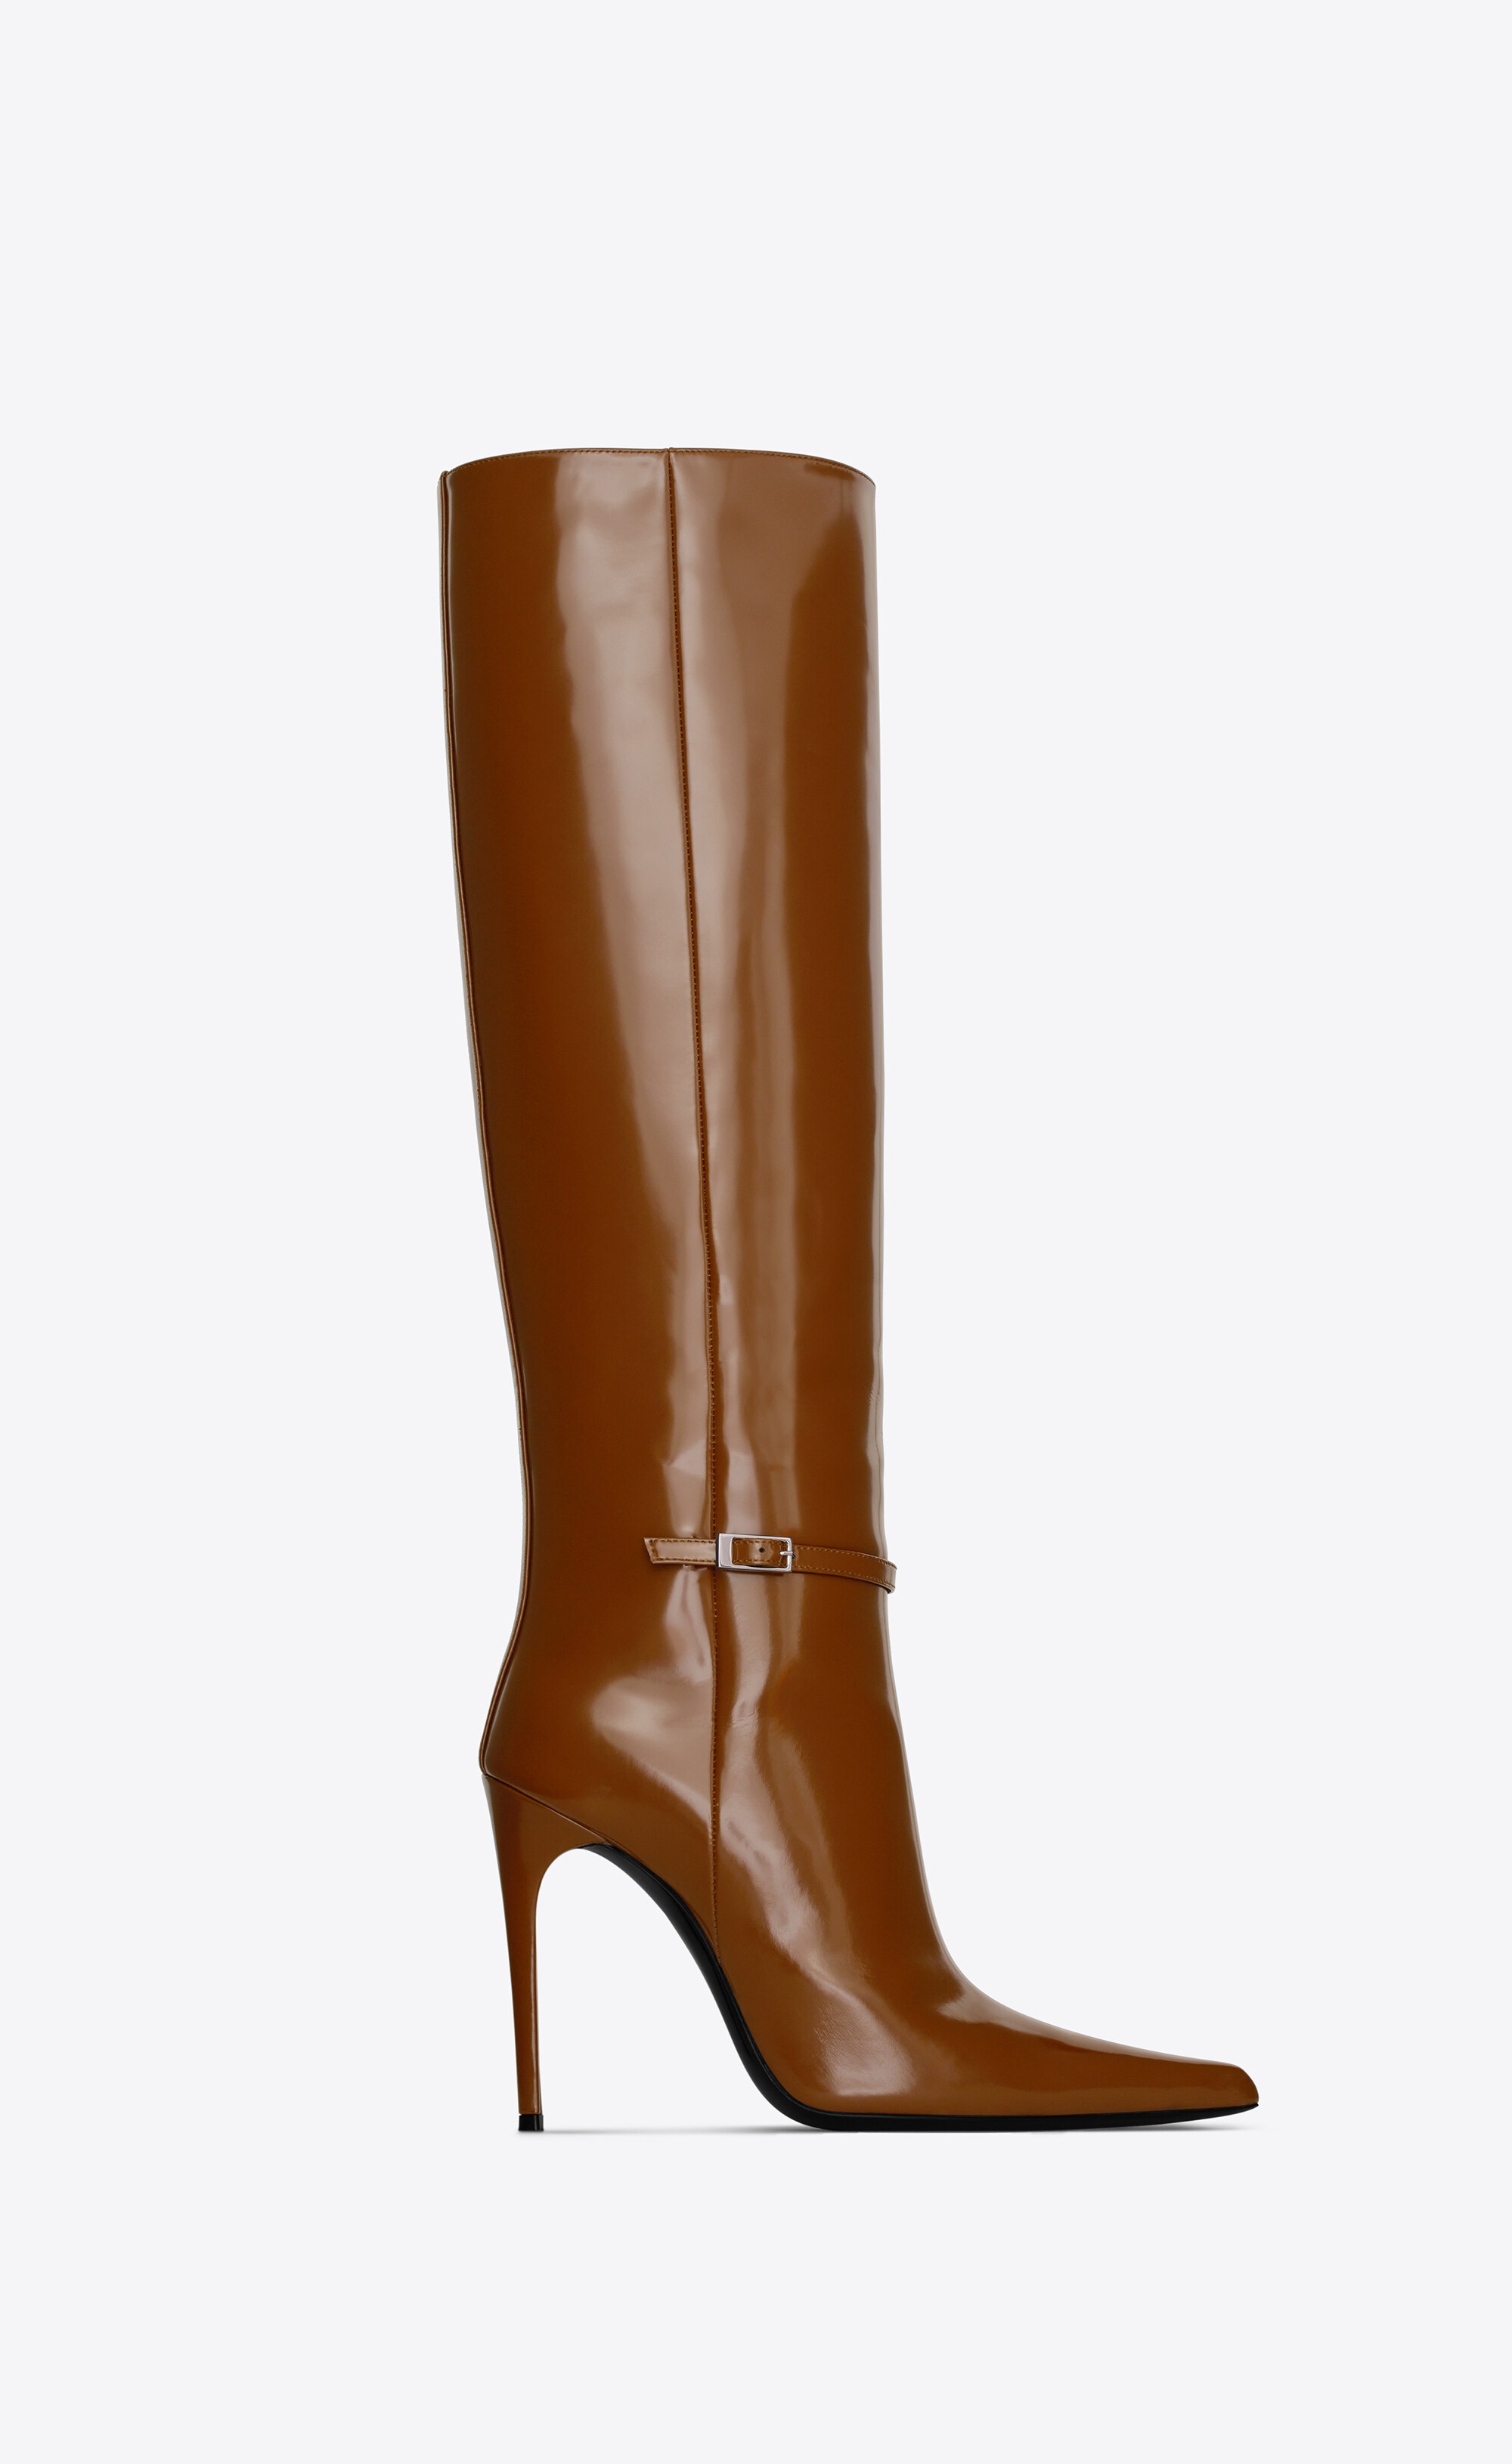 SAINT LAURENT vendome boots in glazed leather | REVERSIBLE